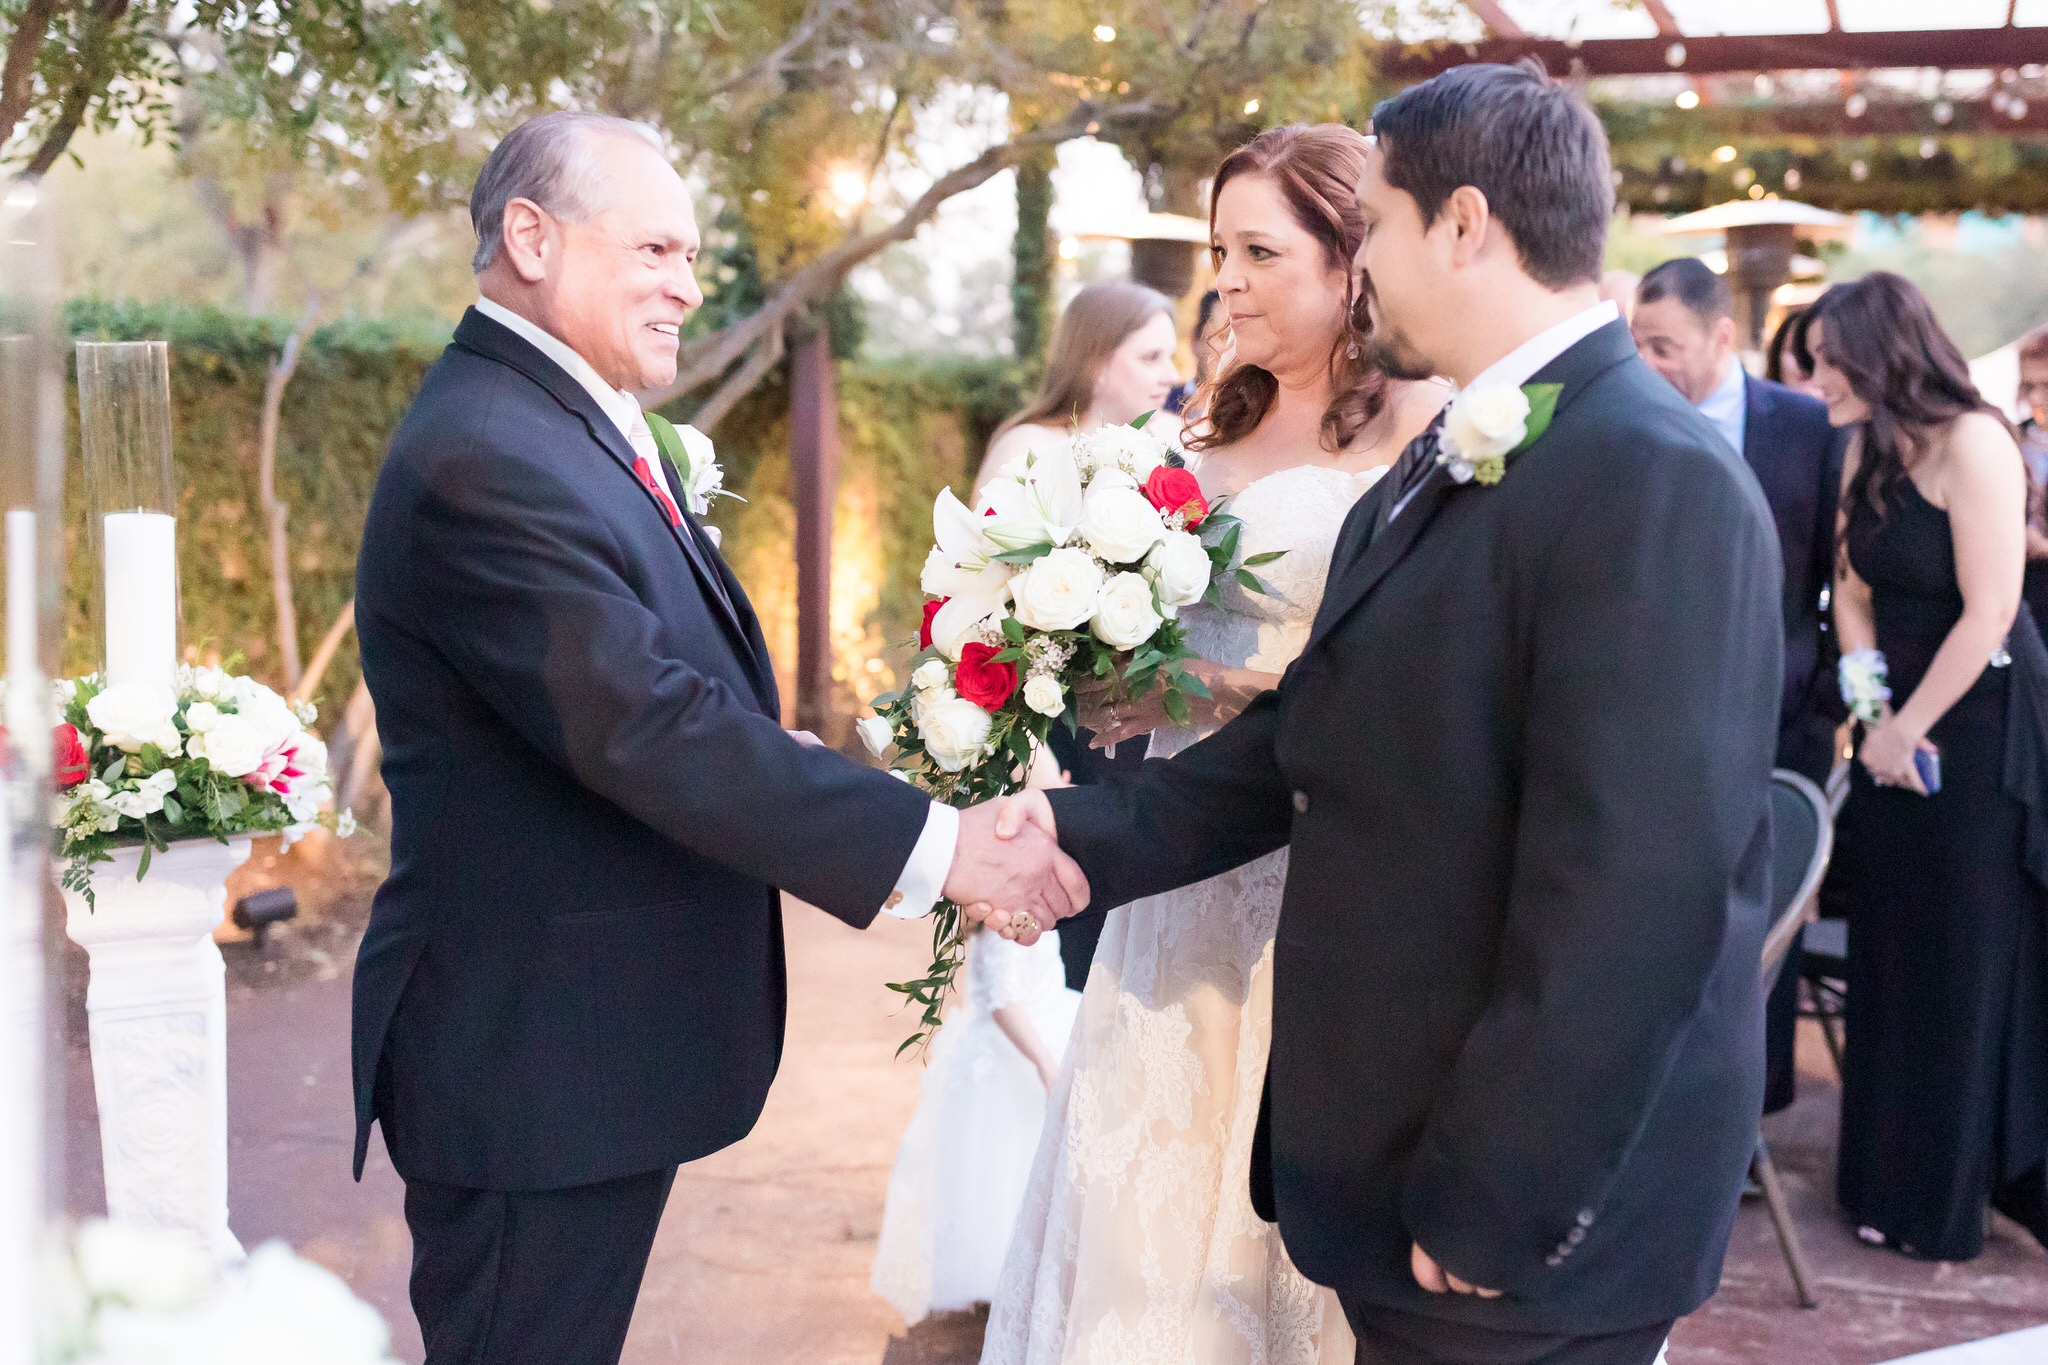 An Intimate Wedding at Paesanos 1604 in San Antonio, TX by Dawn Elizabeth Studios, San Antonio Wedding Photographer